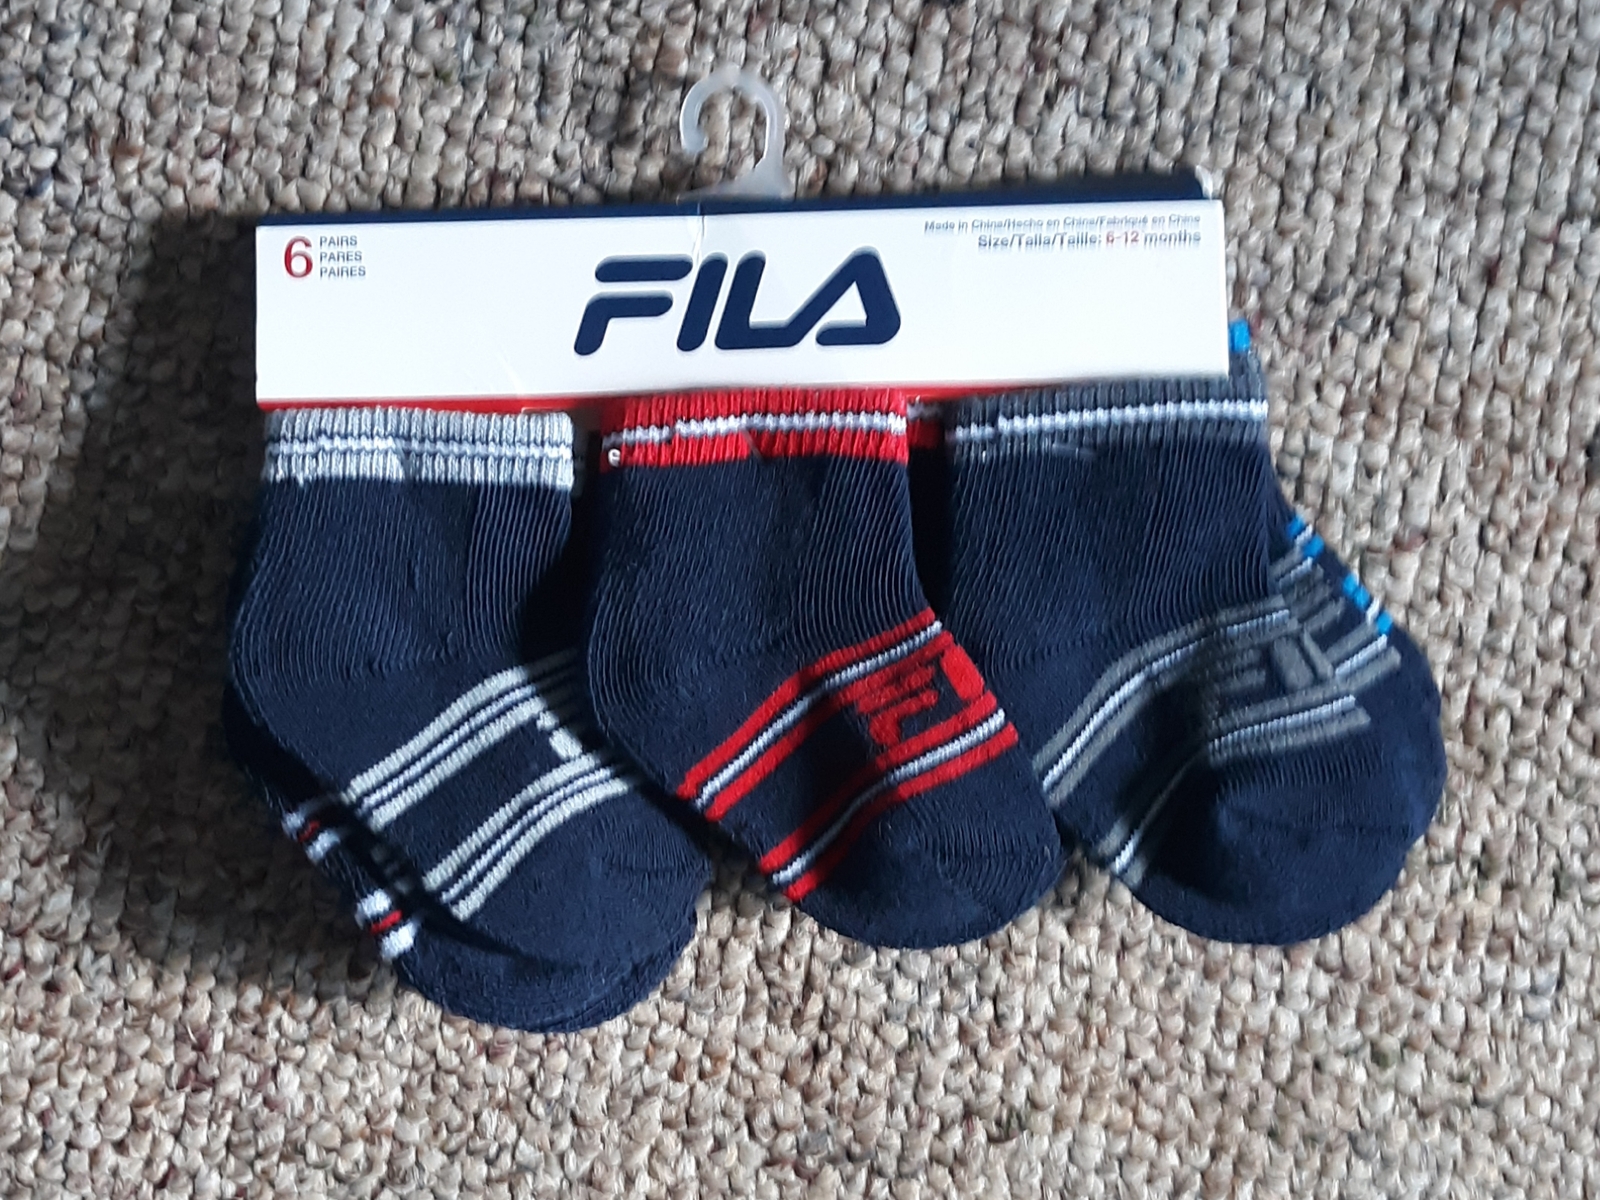 Fila baby fashion socks - $8.00